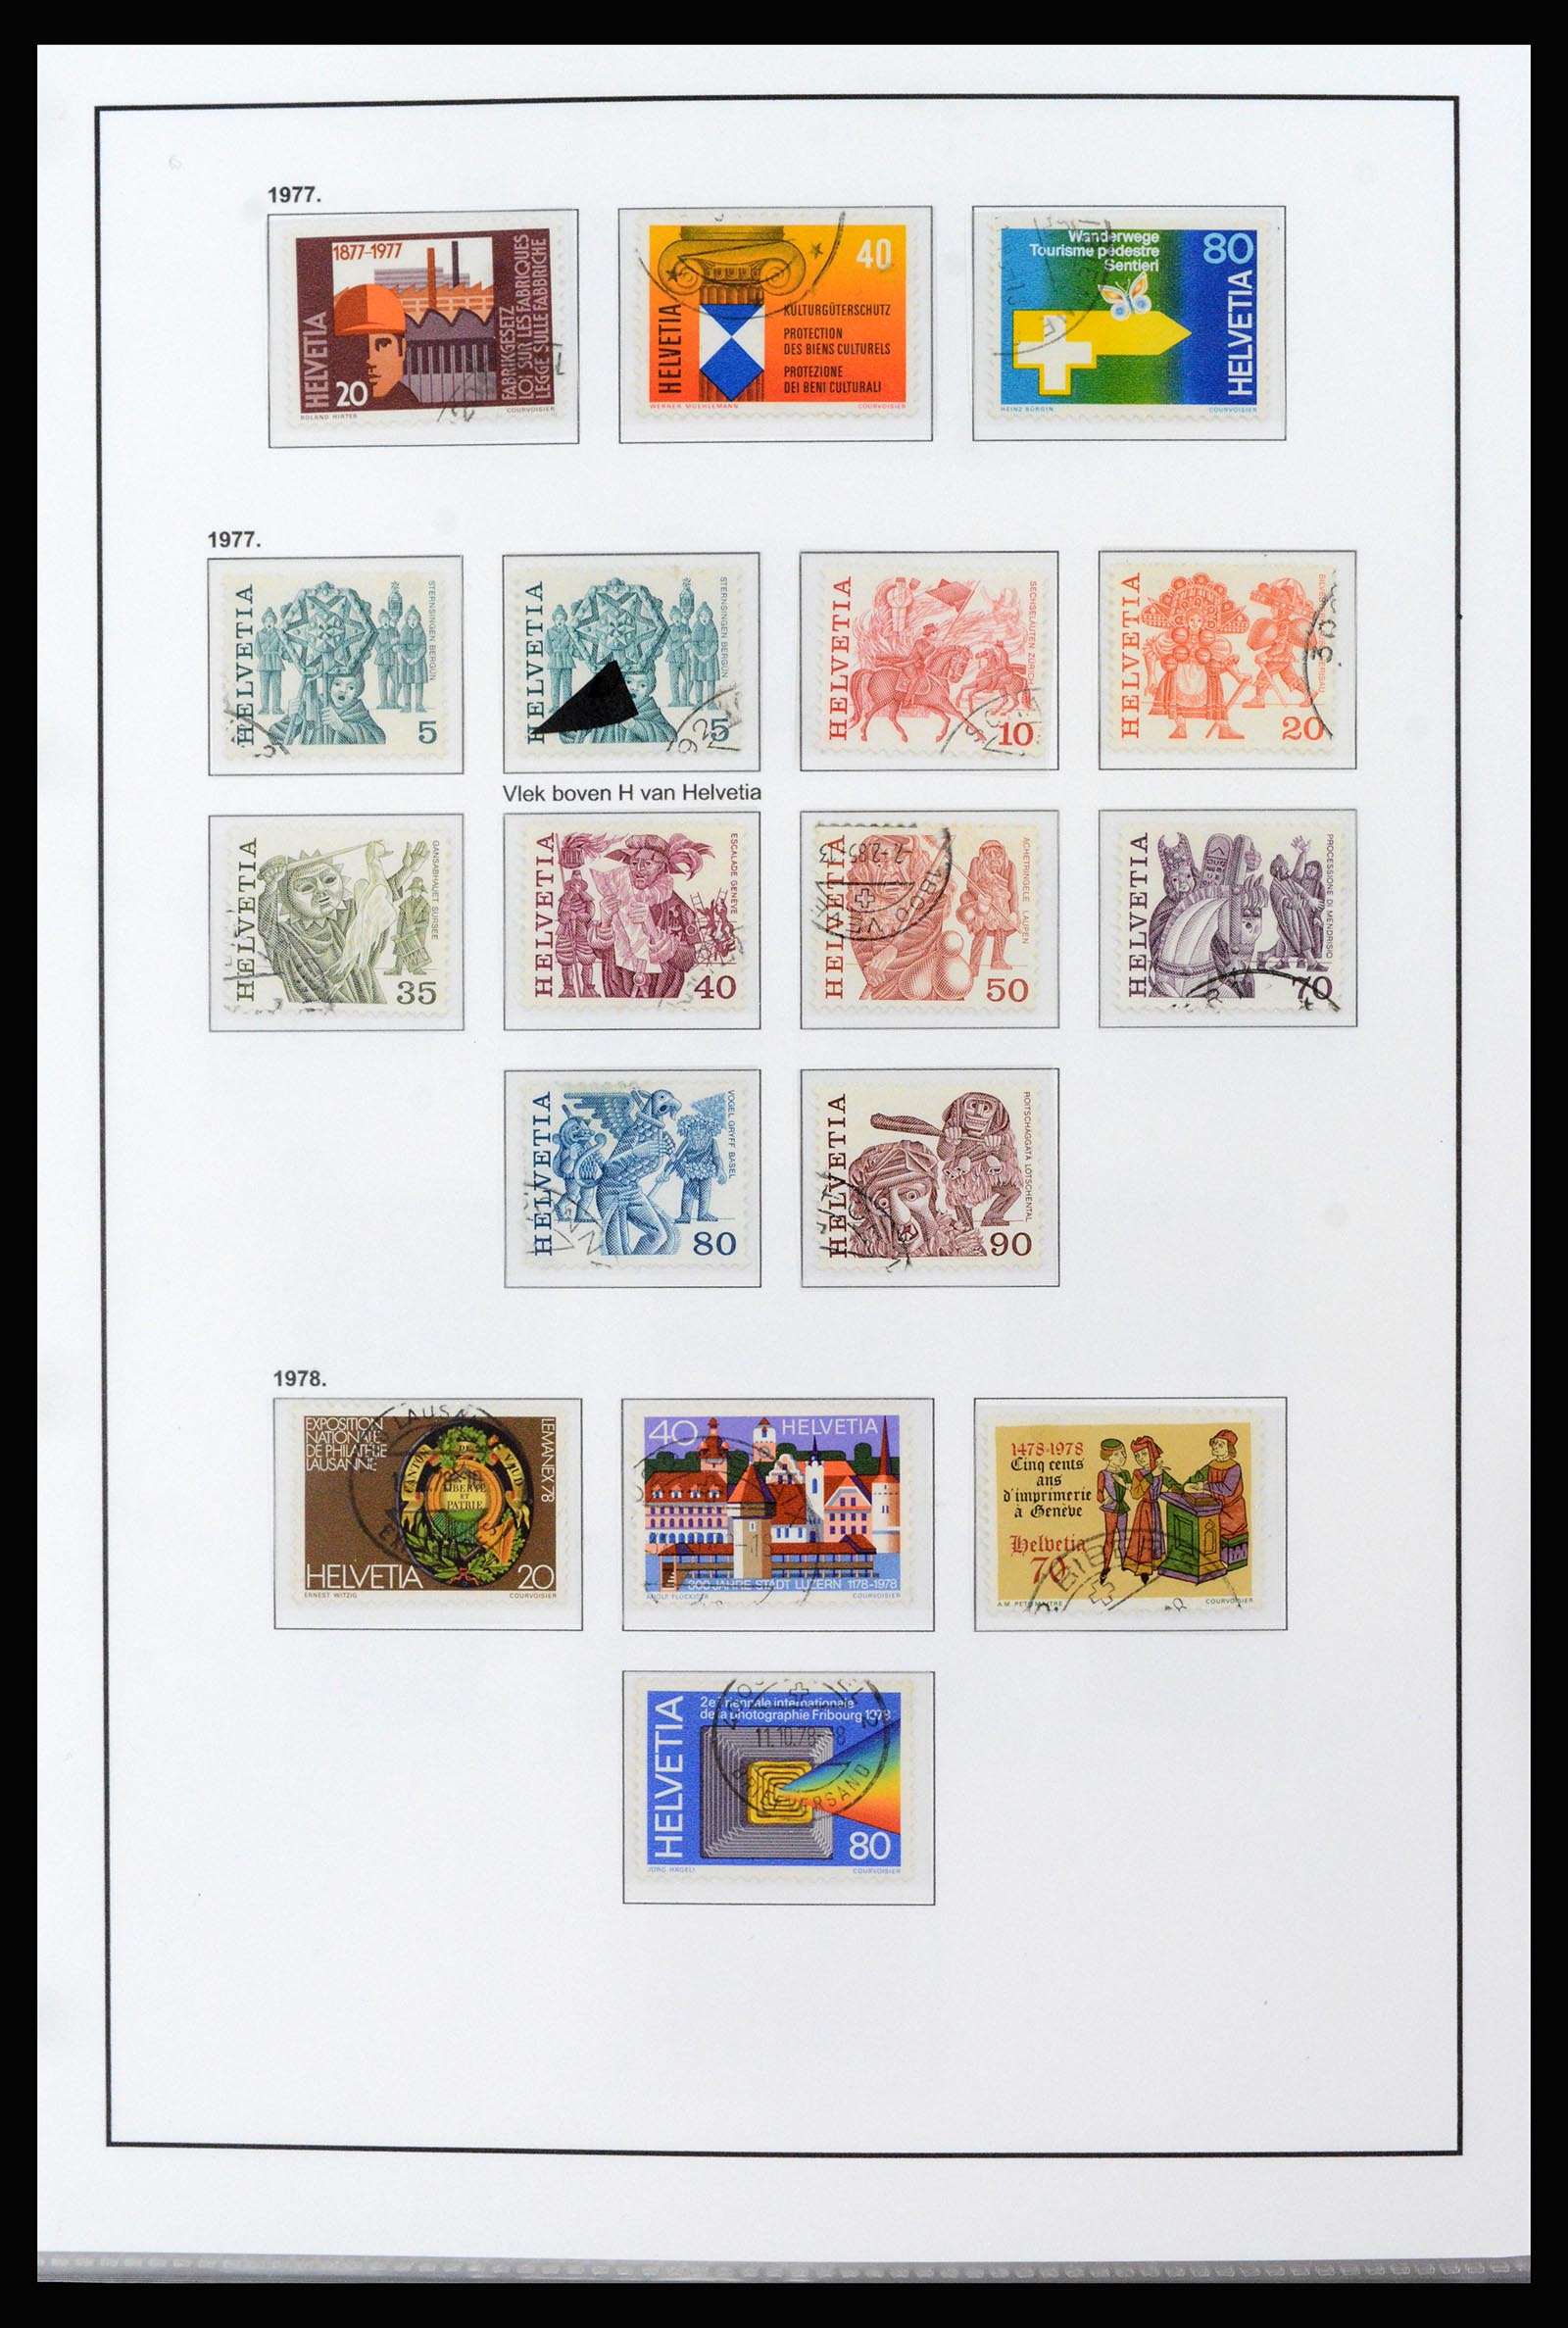 37225 037 - Stamp collection 37225 Switzerland 1854-2020.